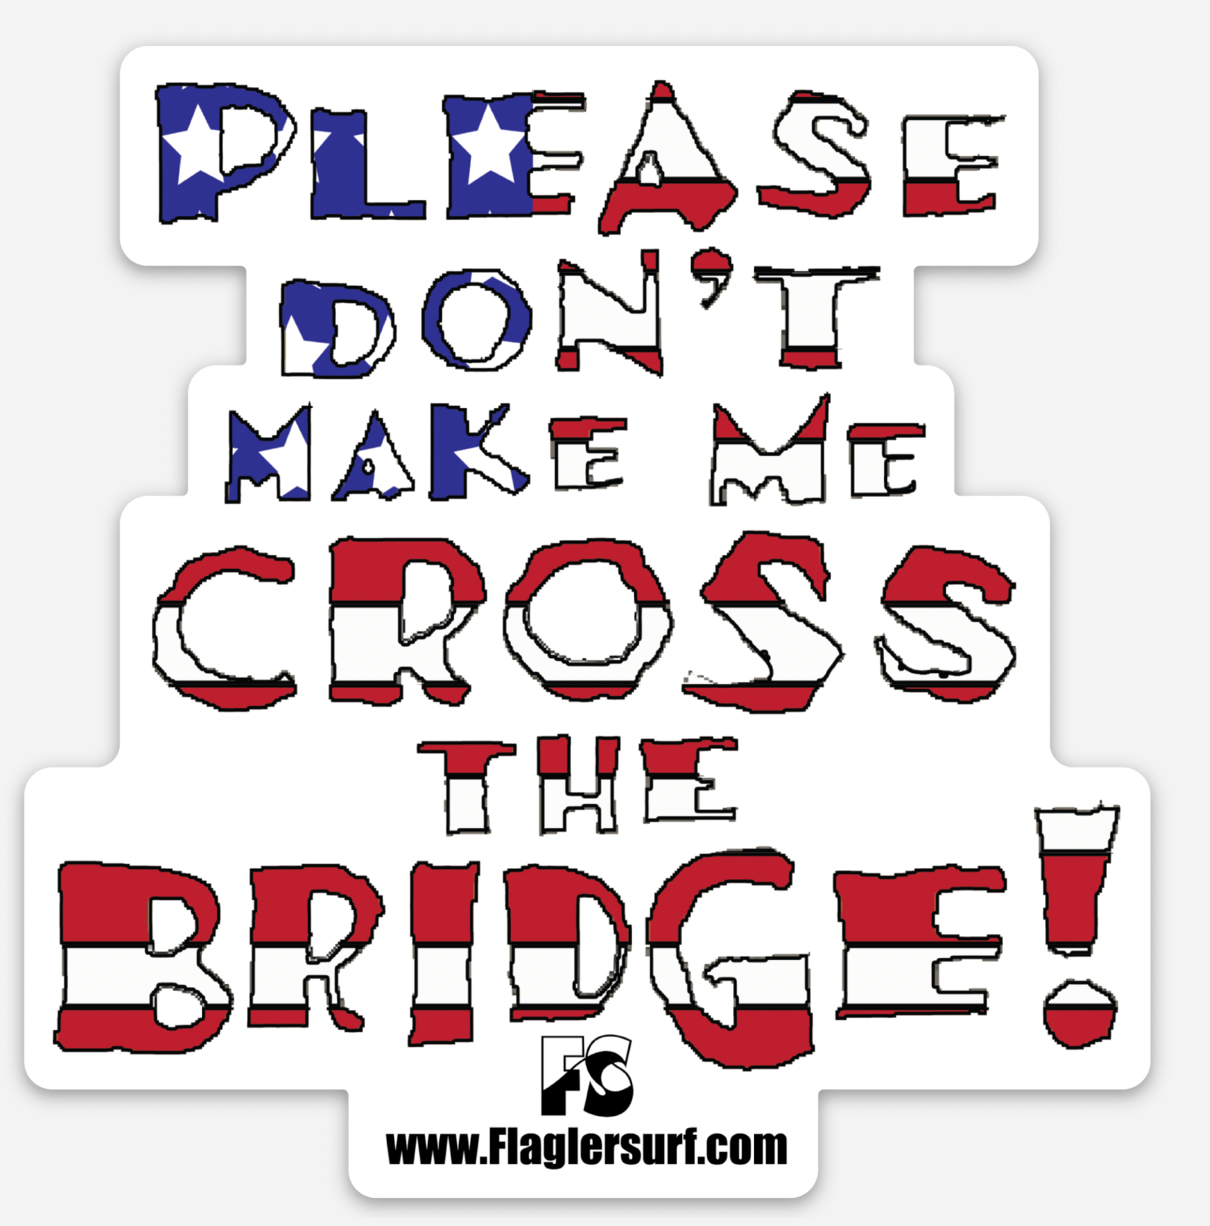 Bridge Bottle Koozie – Please don't make me cross the Bridge!